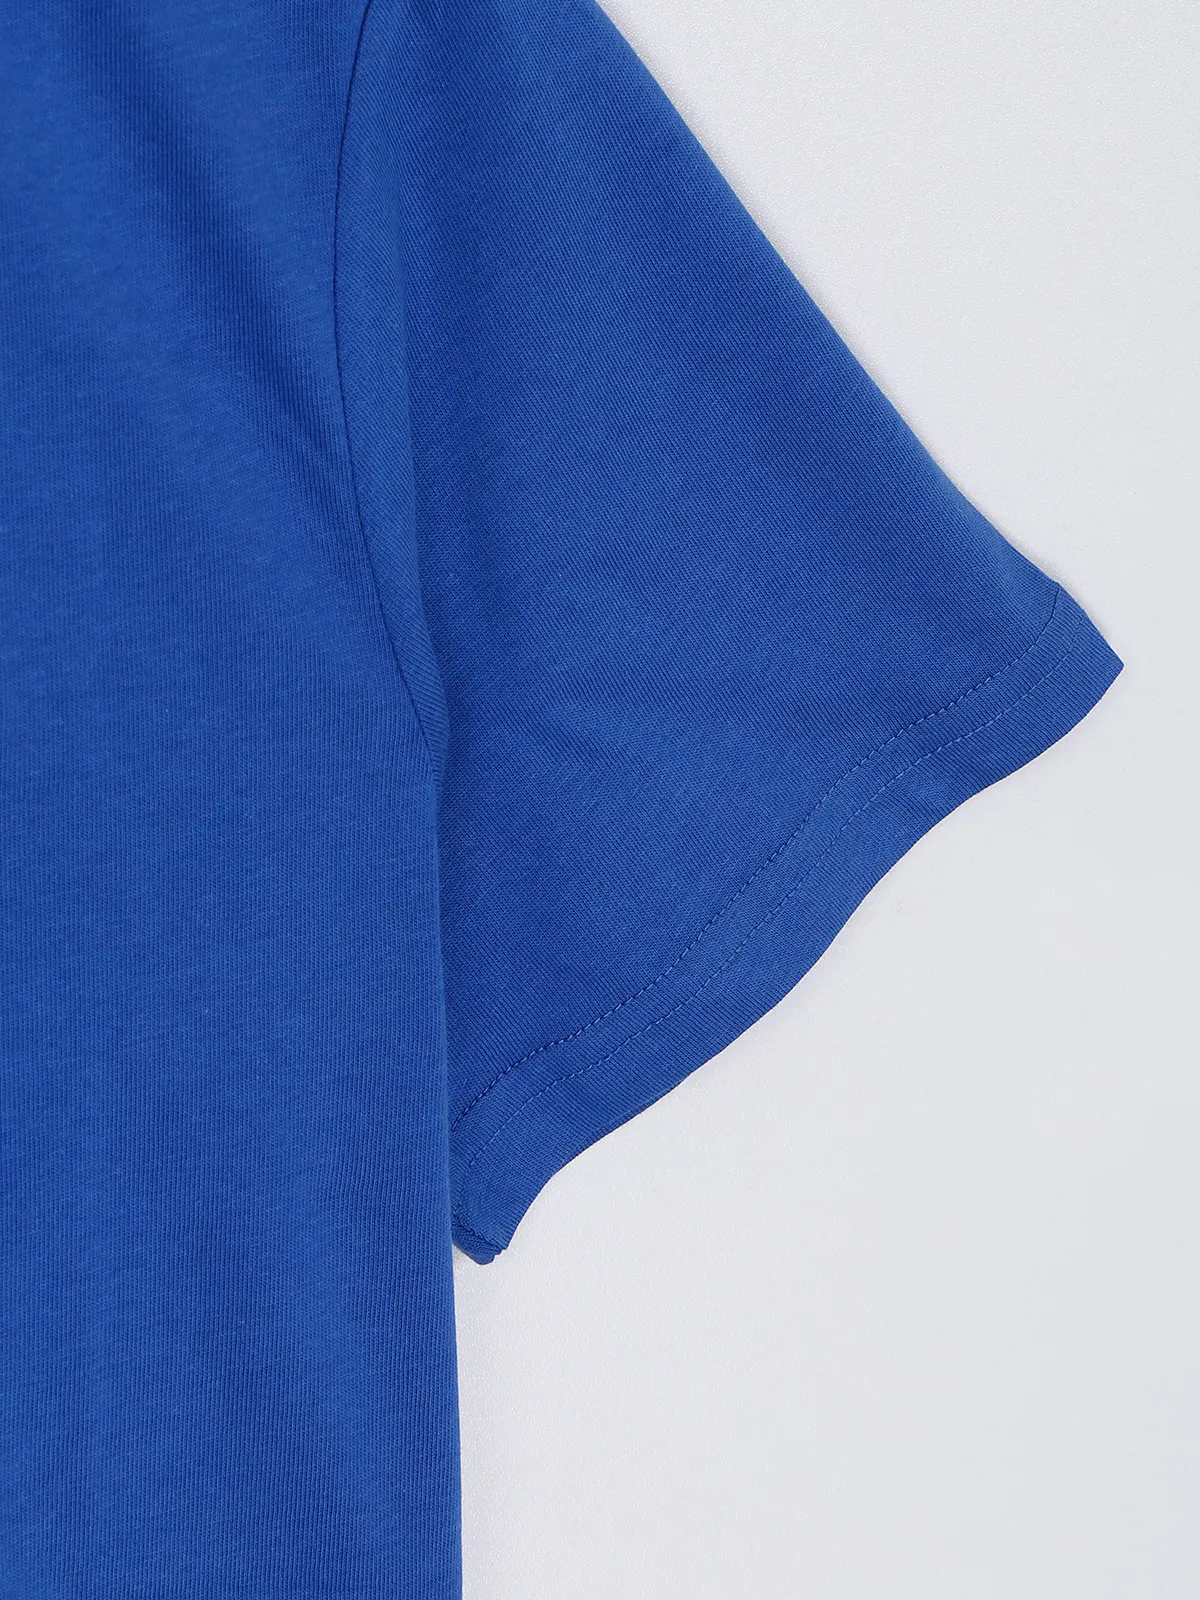 UCB cotton blue printed t shirt